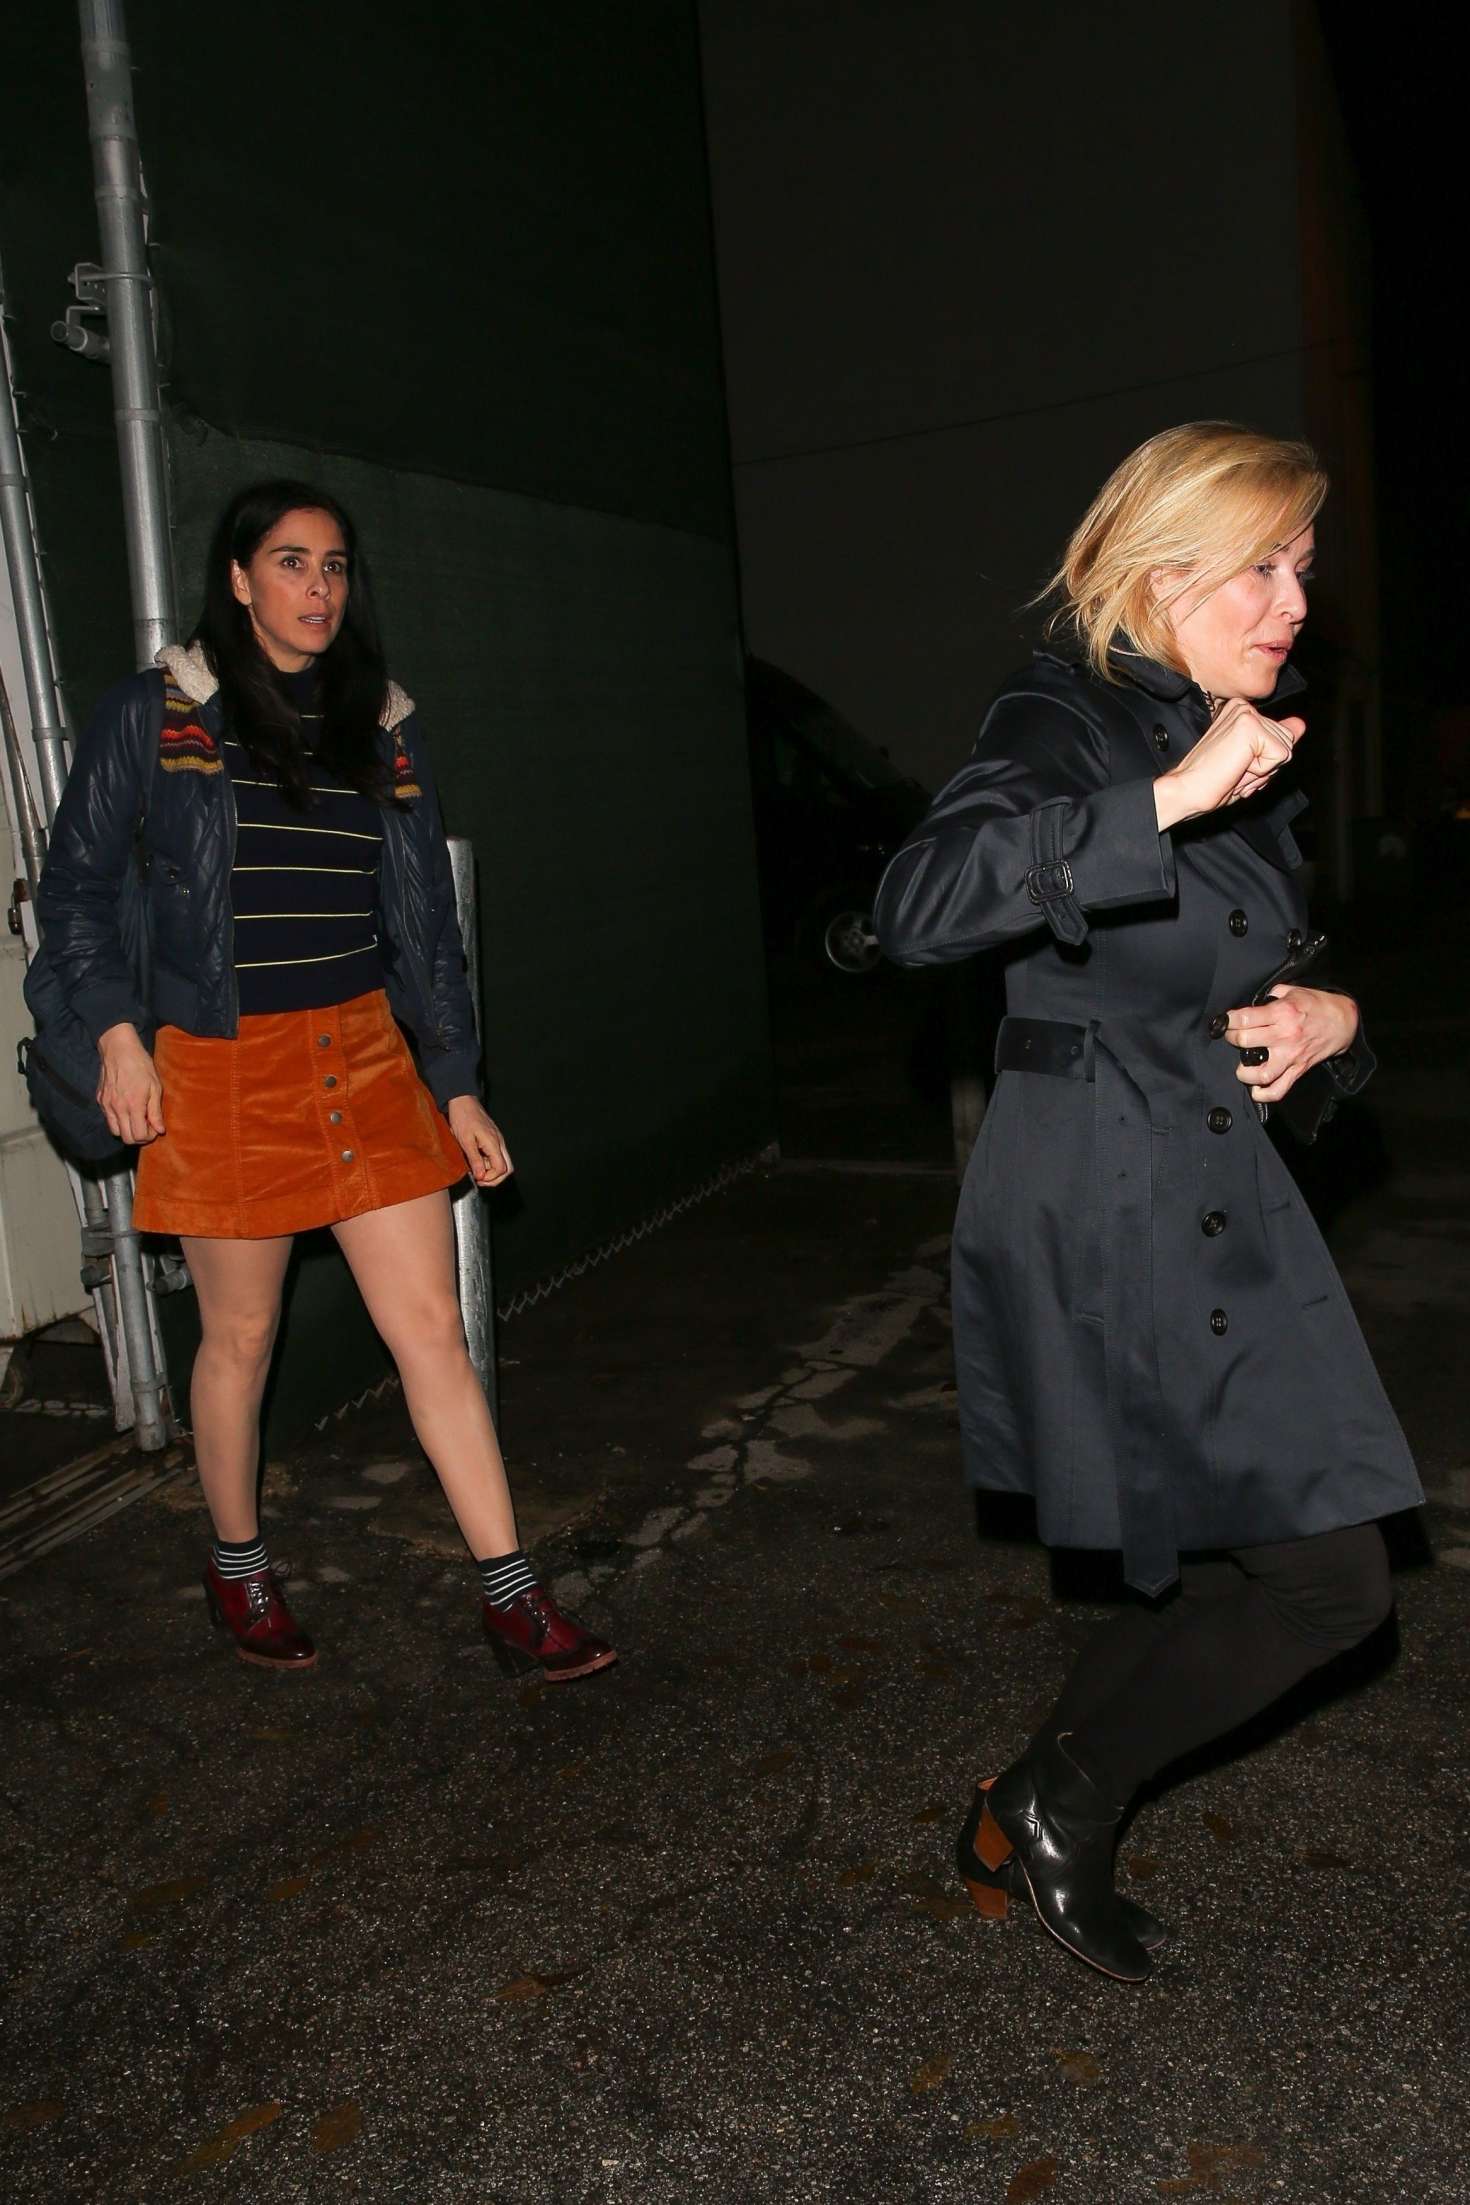 Chelsea Handler and Sarah Silverman - Leaving Craig's restaurant in West Hollywood